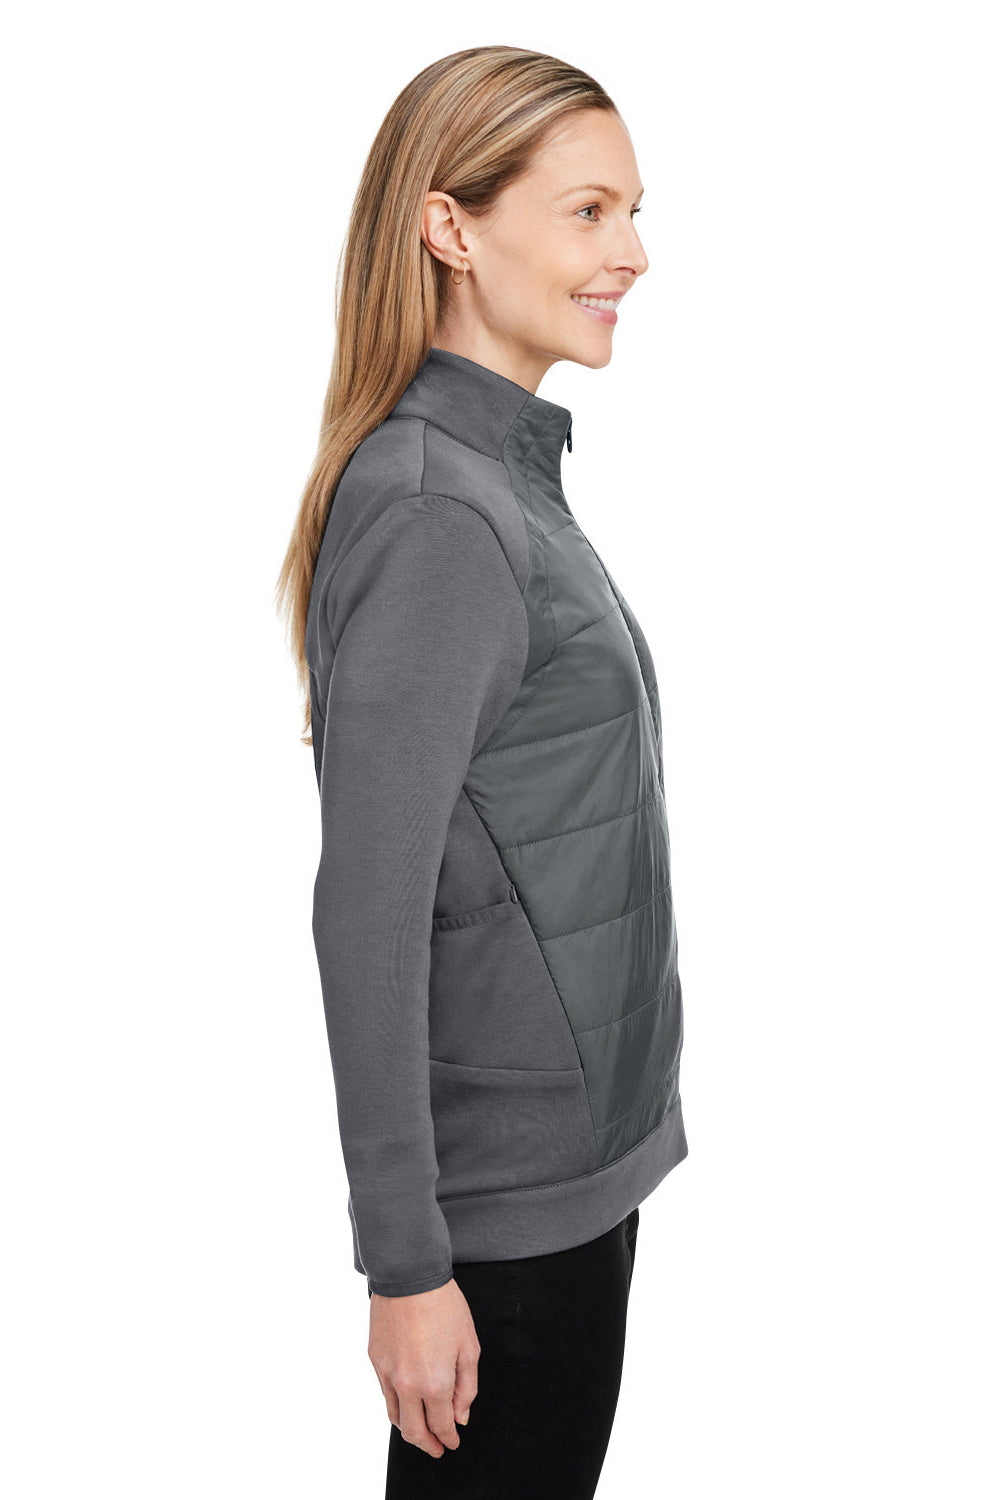 Spyder S17978 Womens Impact Full Zip Jacket Polar Grey Side